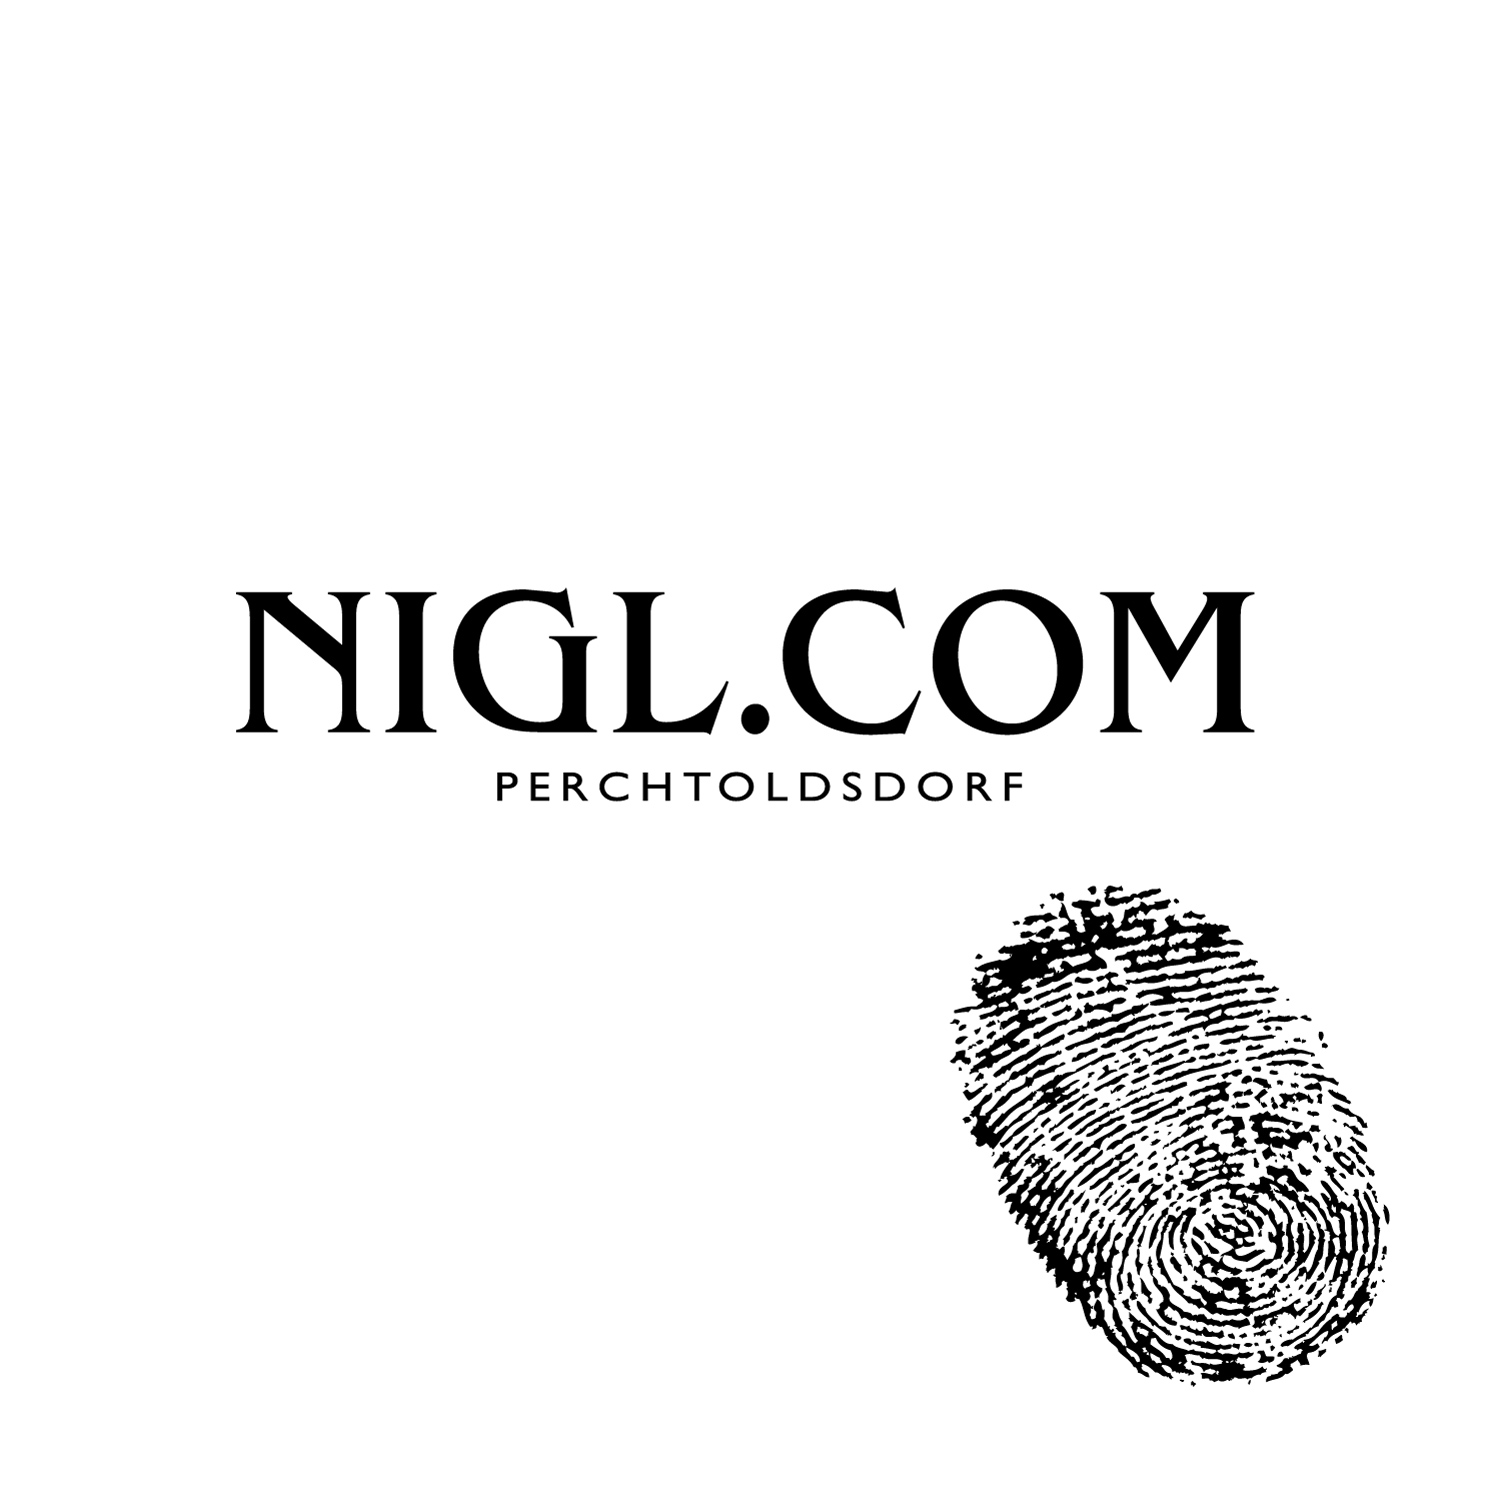 Nigl.com